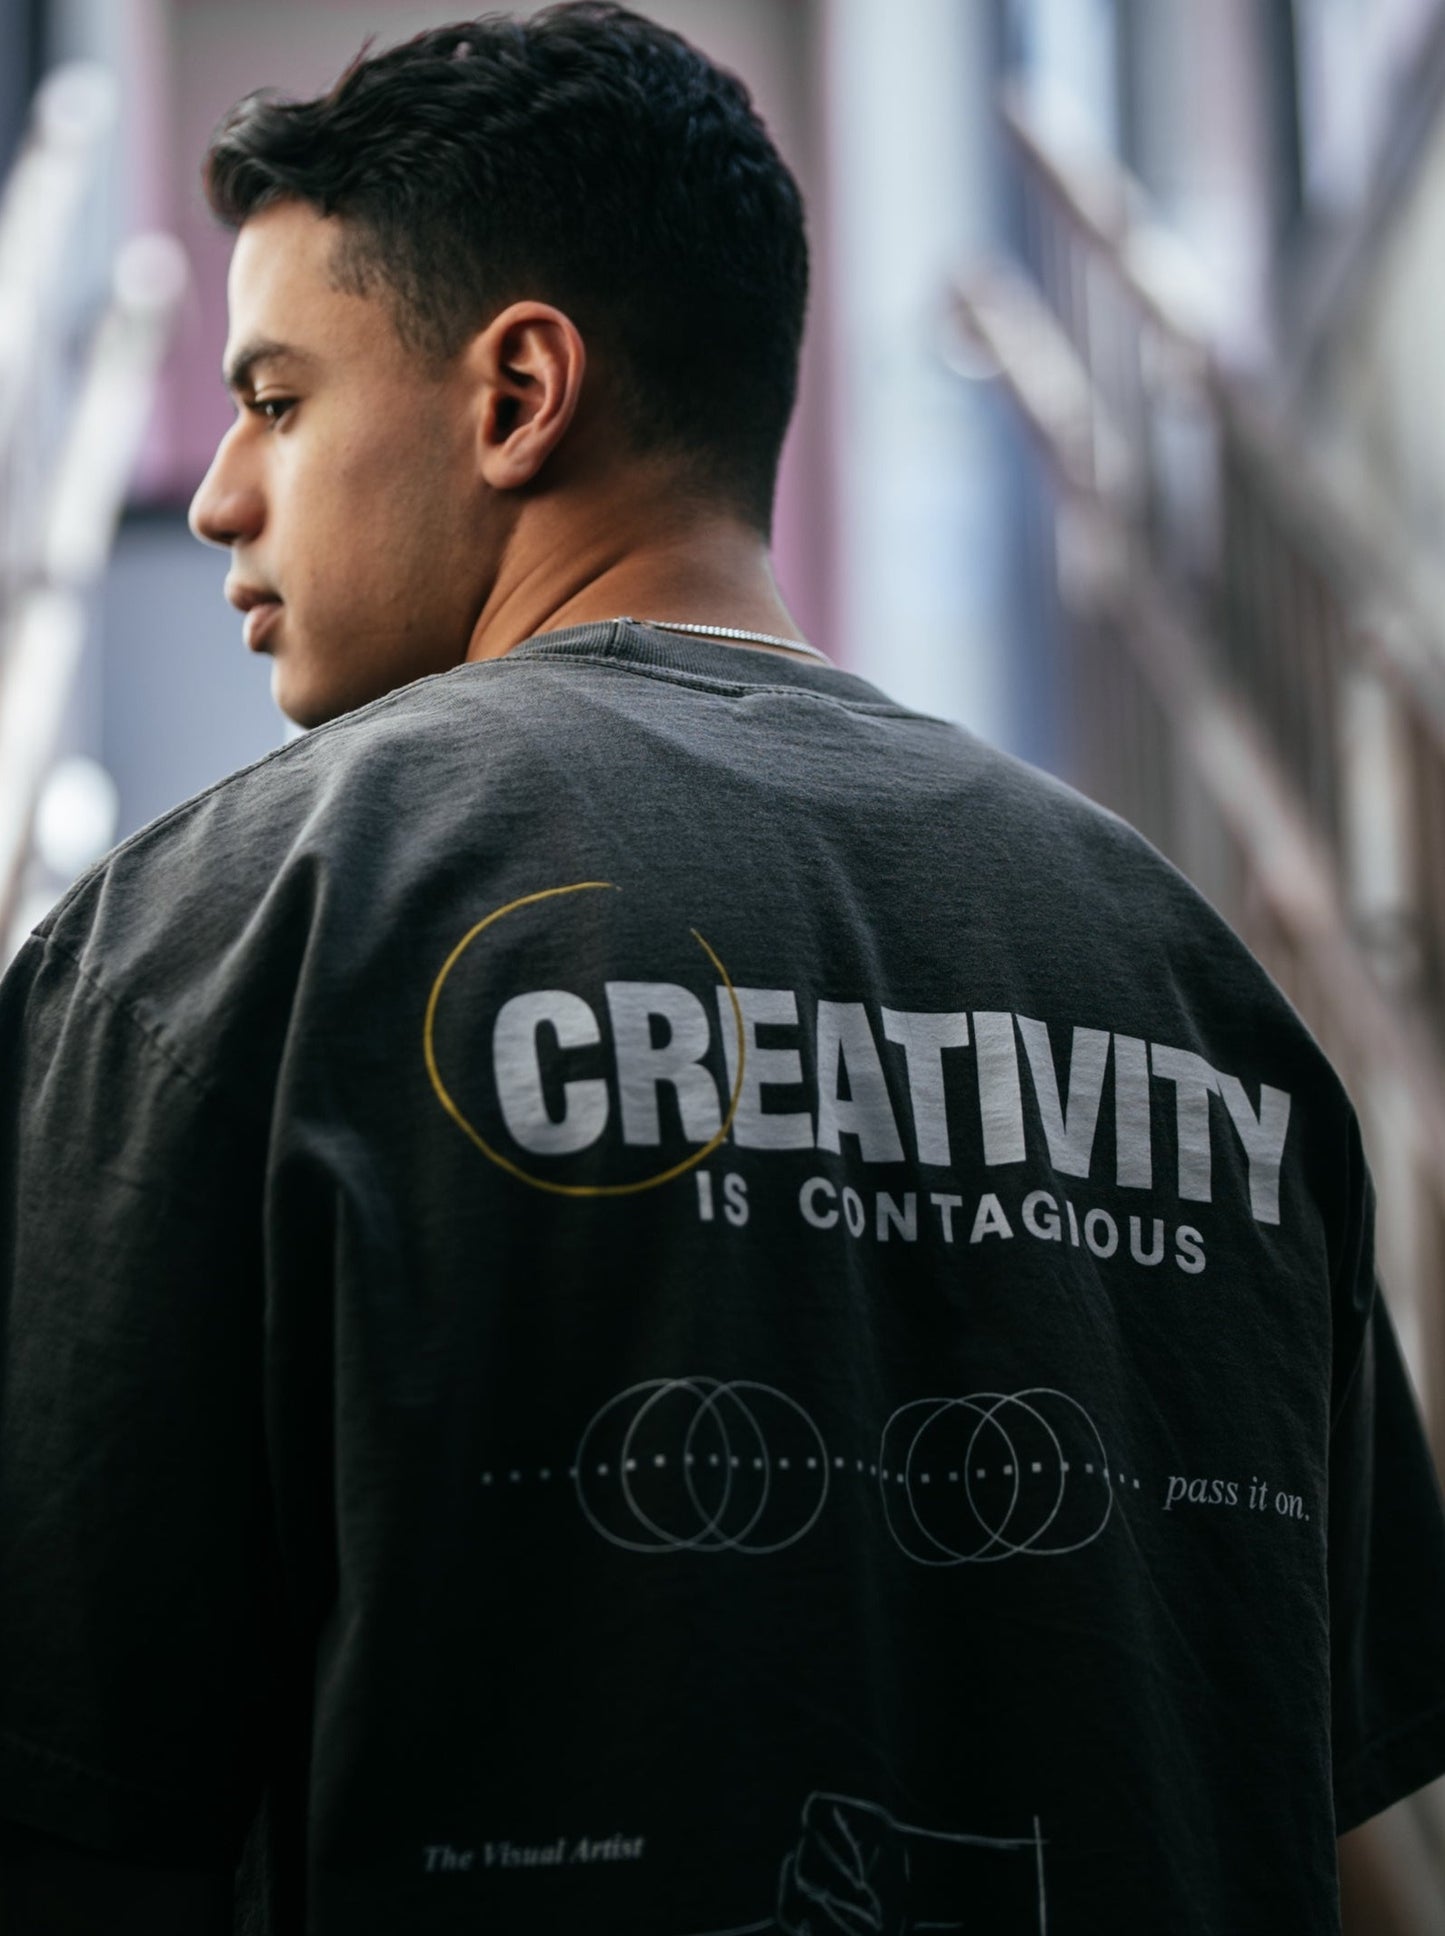 "creativity is contagious" t-shirt